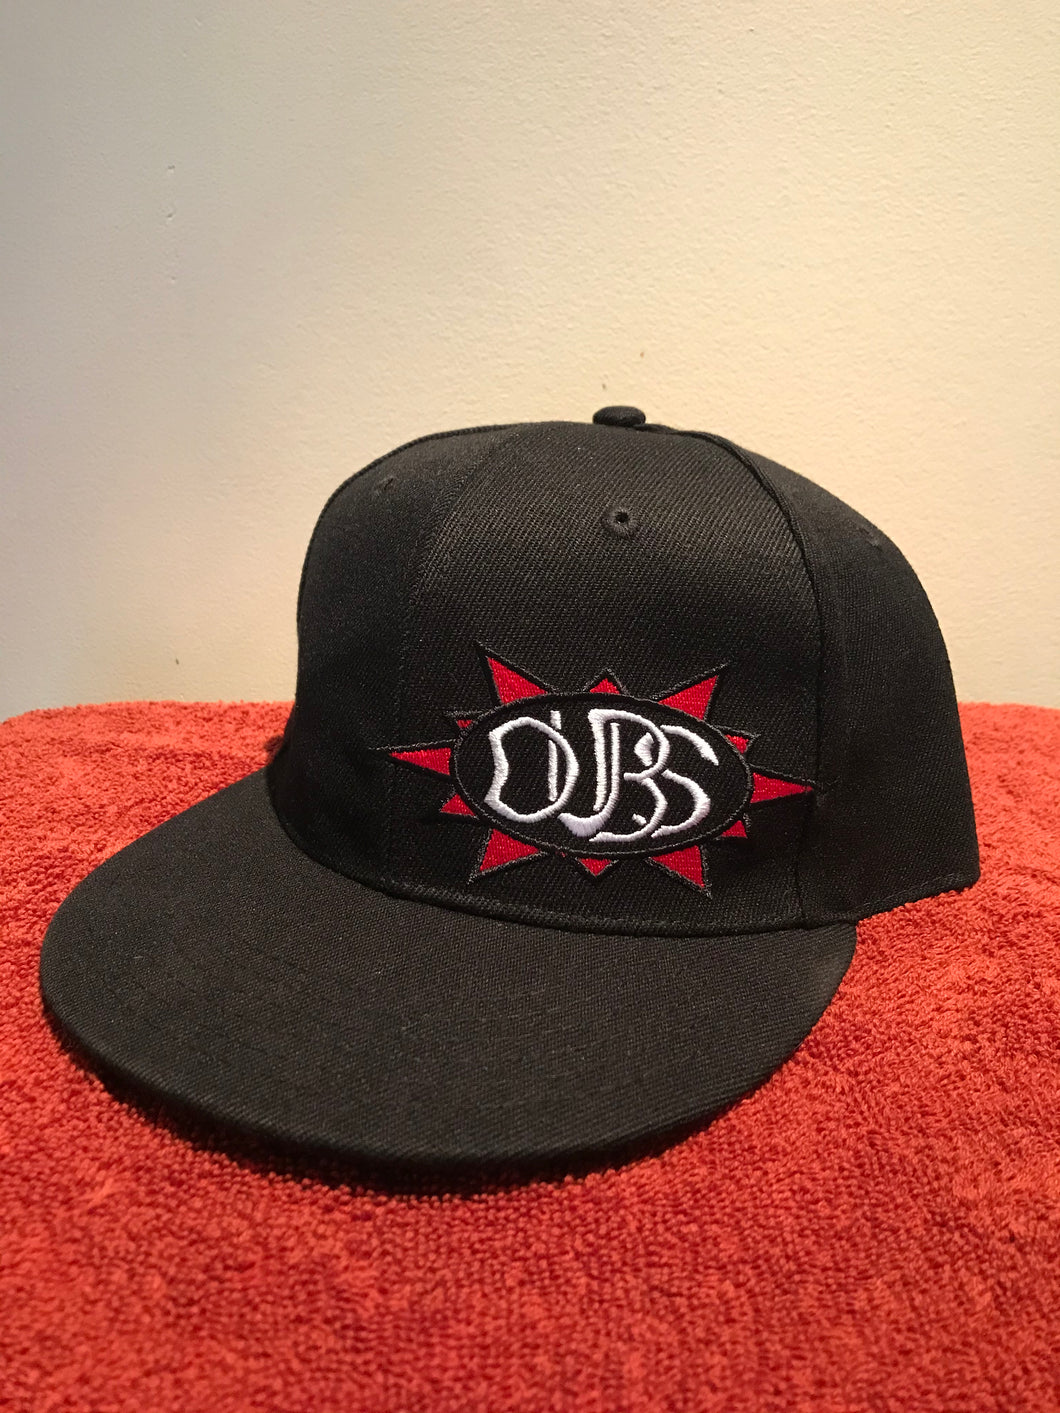 Dubs Kustoms OG Snapback Hat